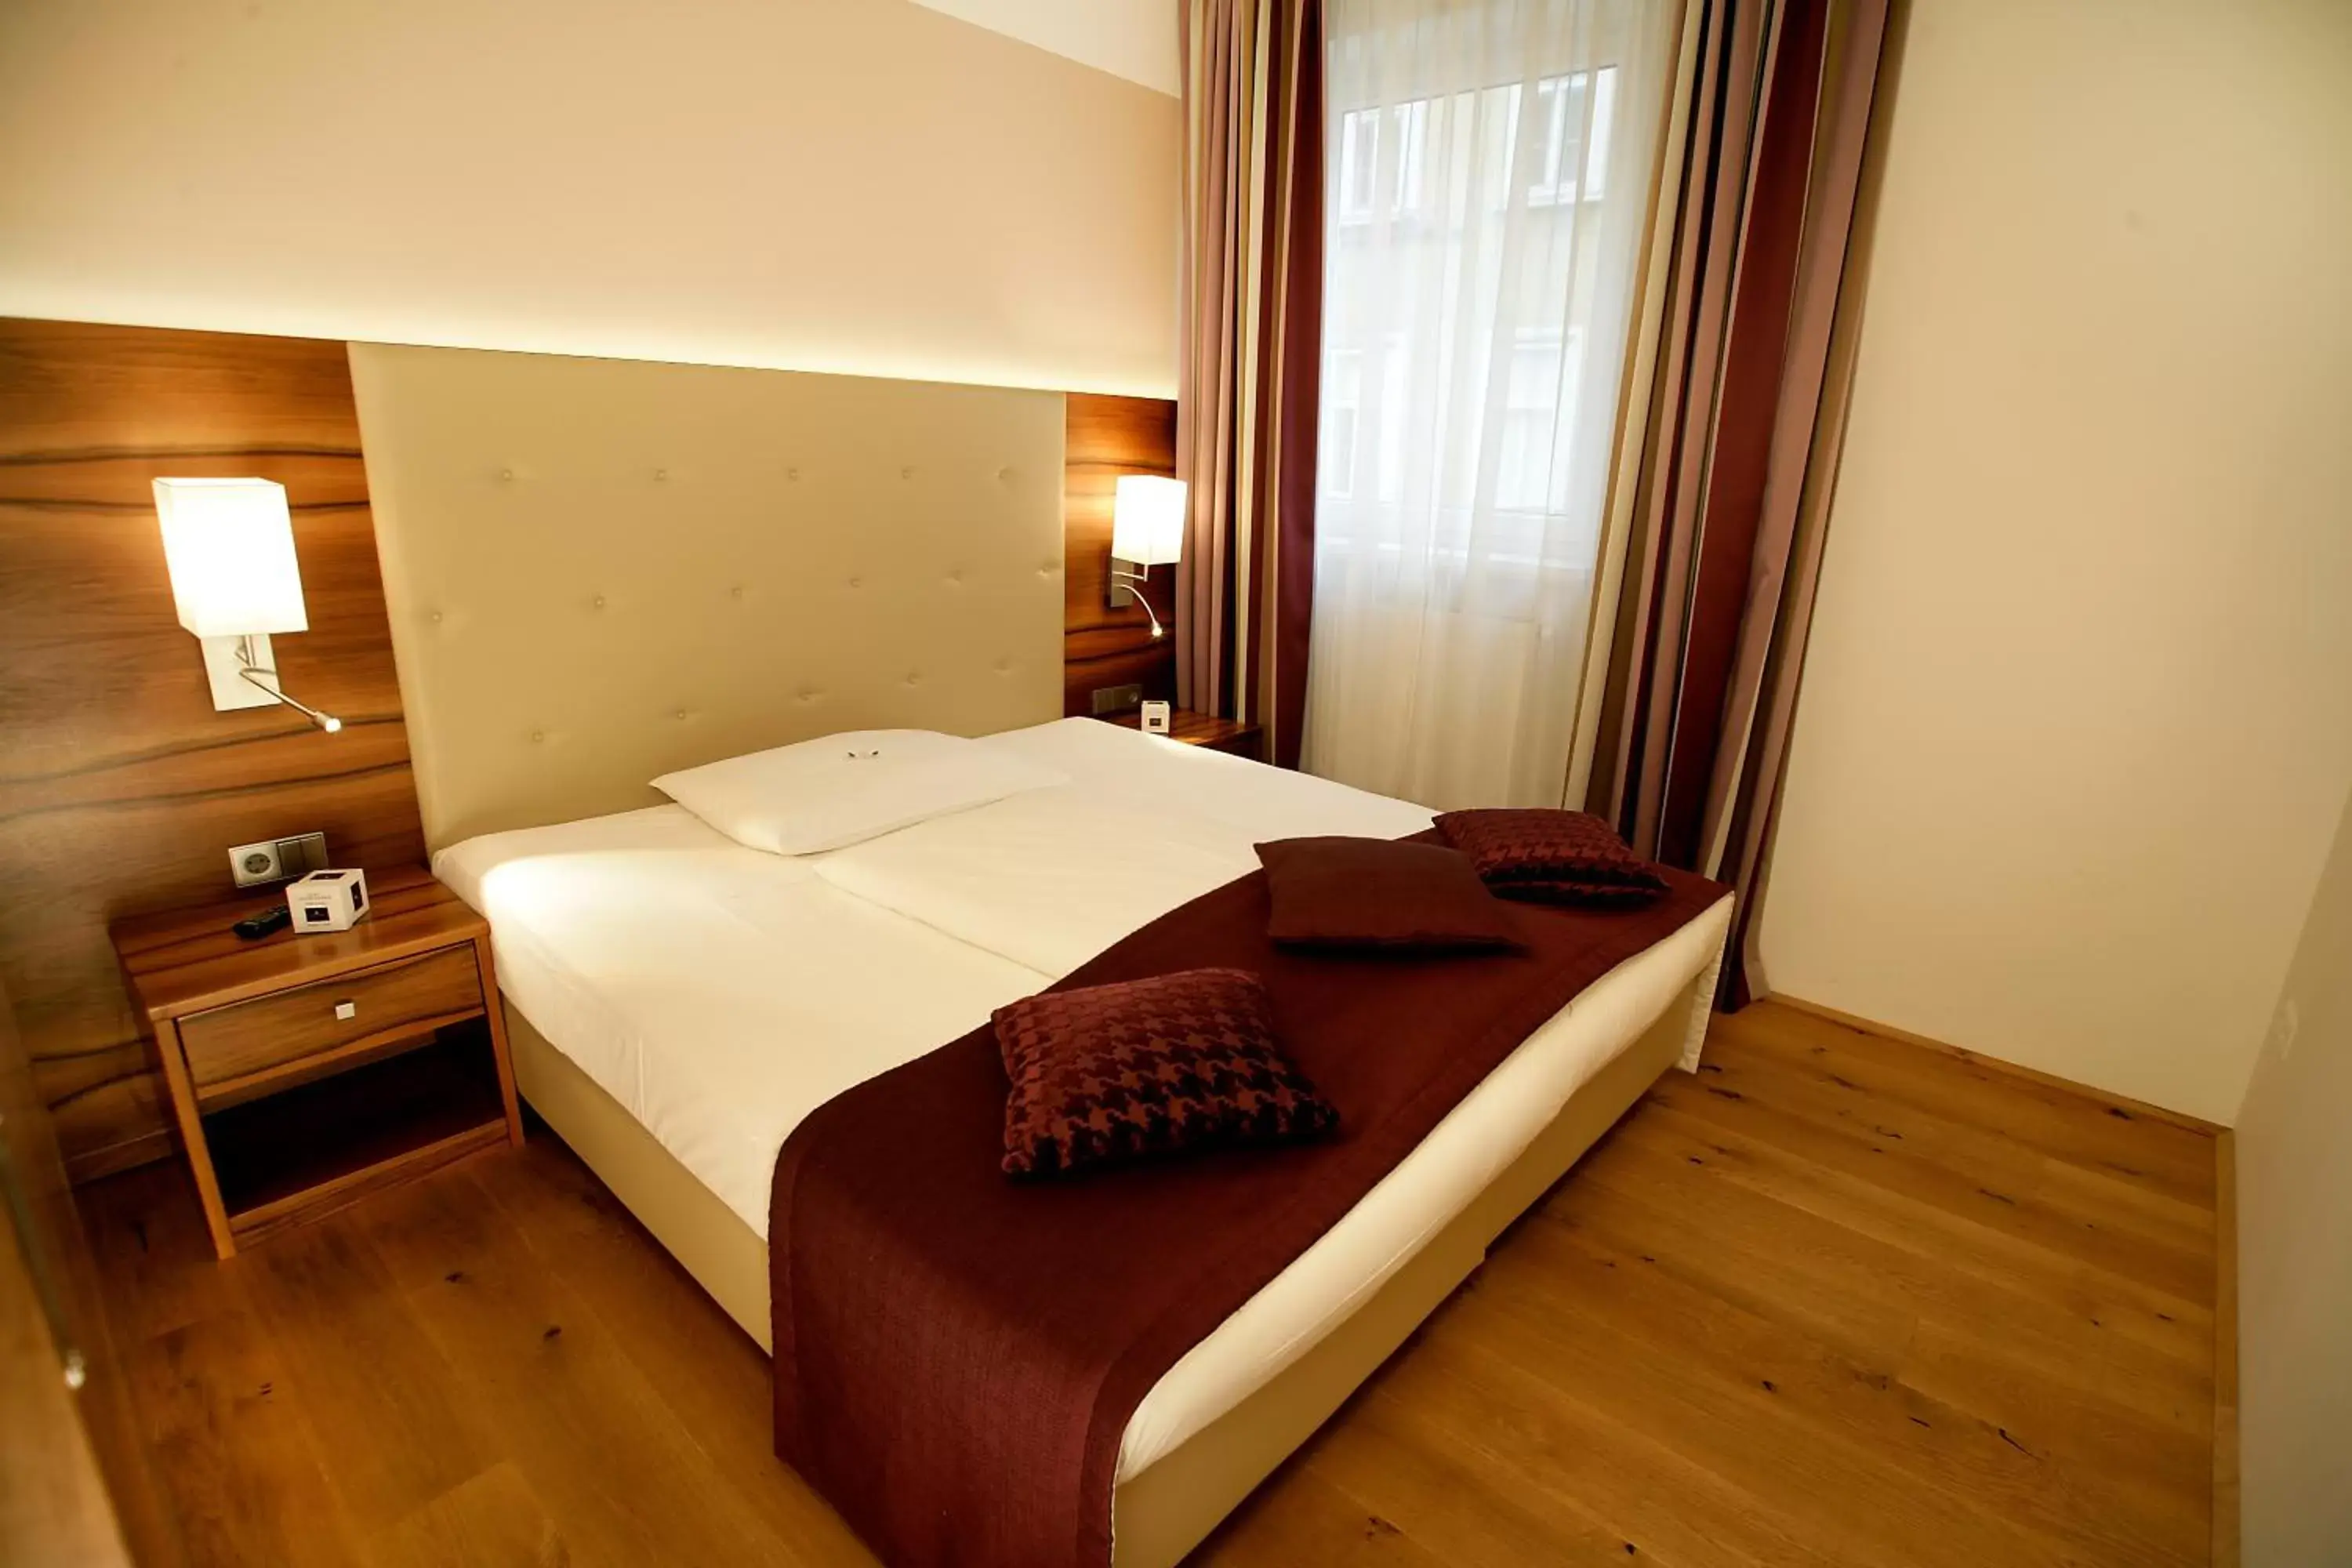 Bed, Room Photo in Hotel Feichtinger Graz